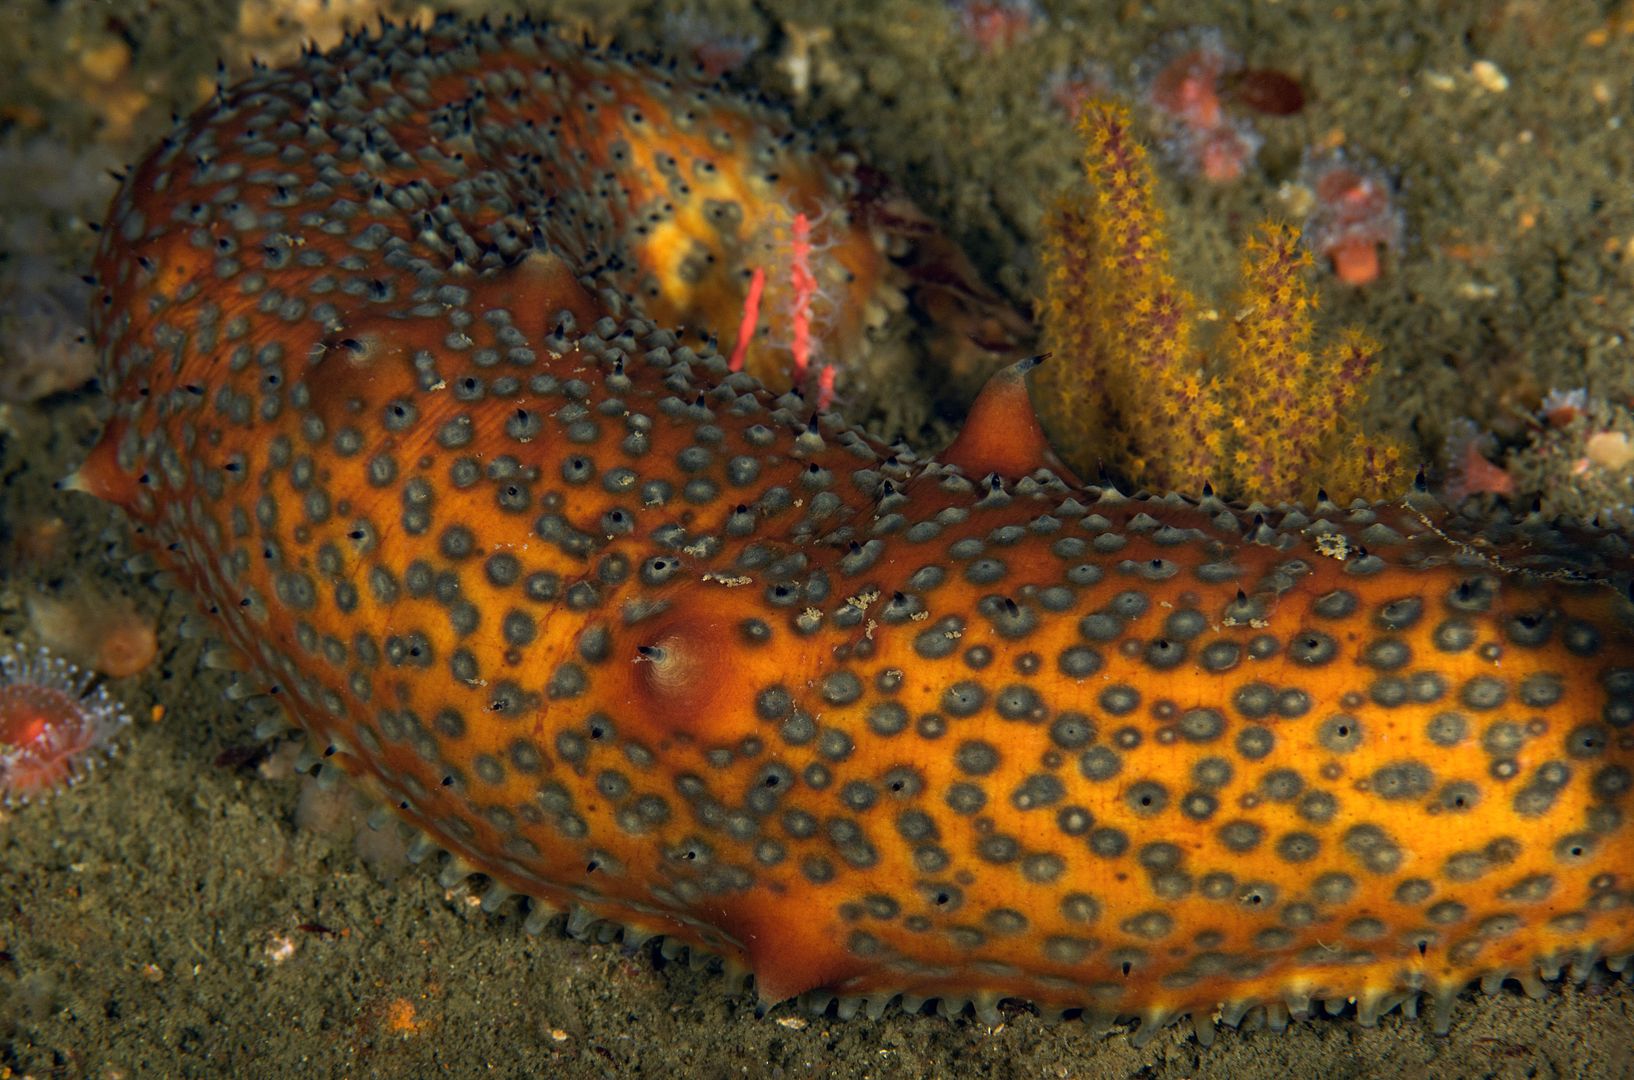  photo Parastichopus parvimensis Warty sea cucumber_zpssqtds7wu.jpg